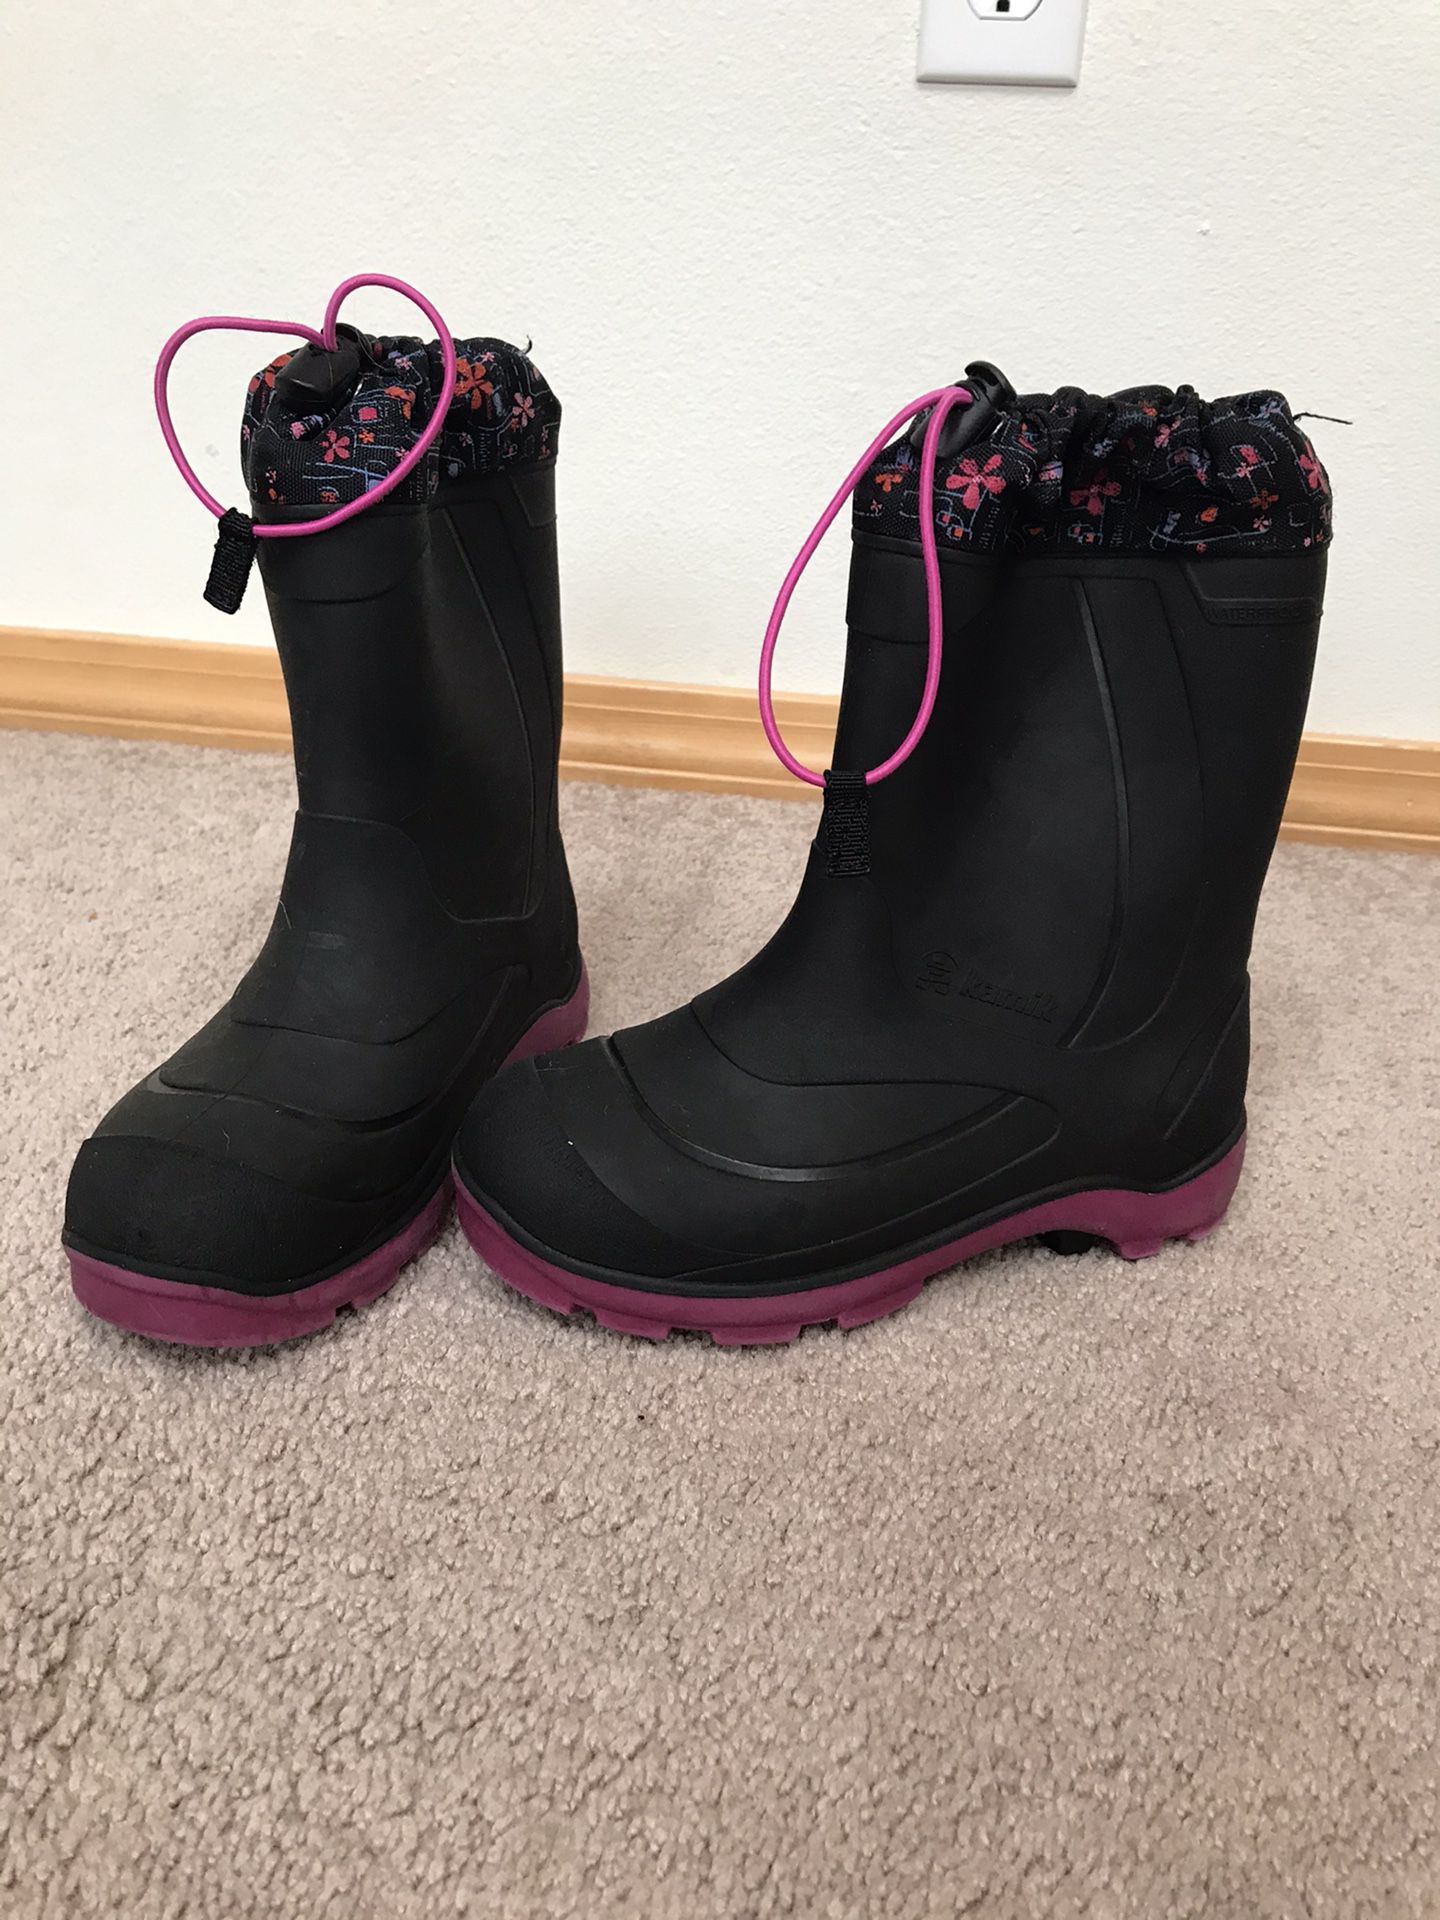 Girls Kamik snow boots size 2